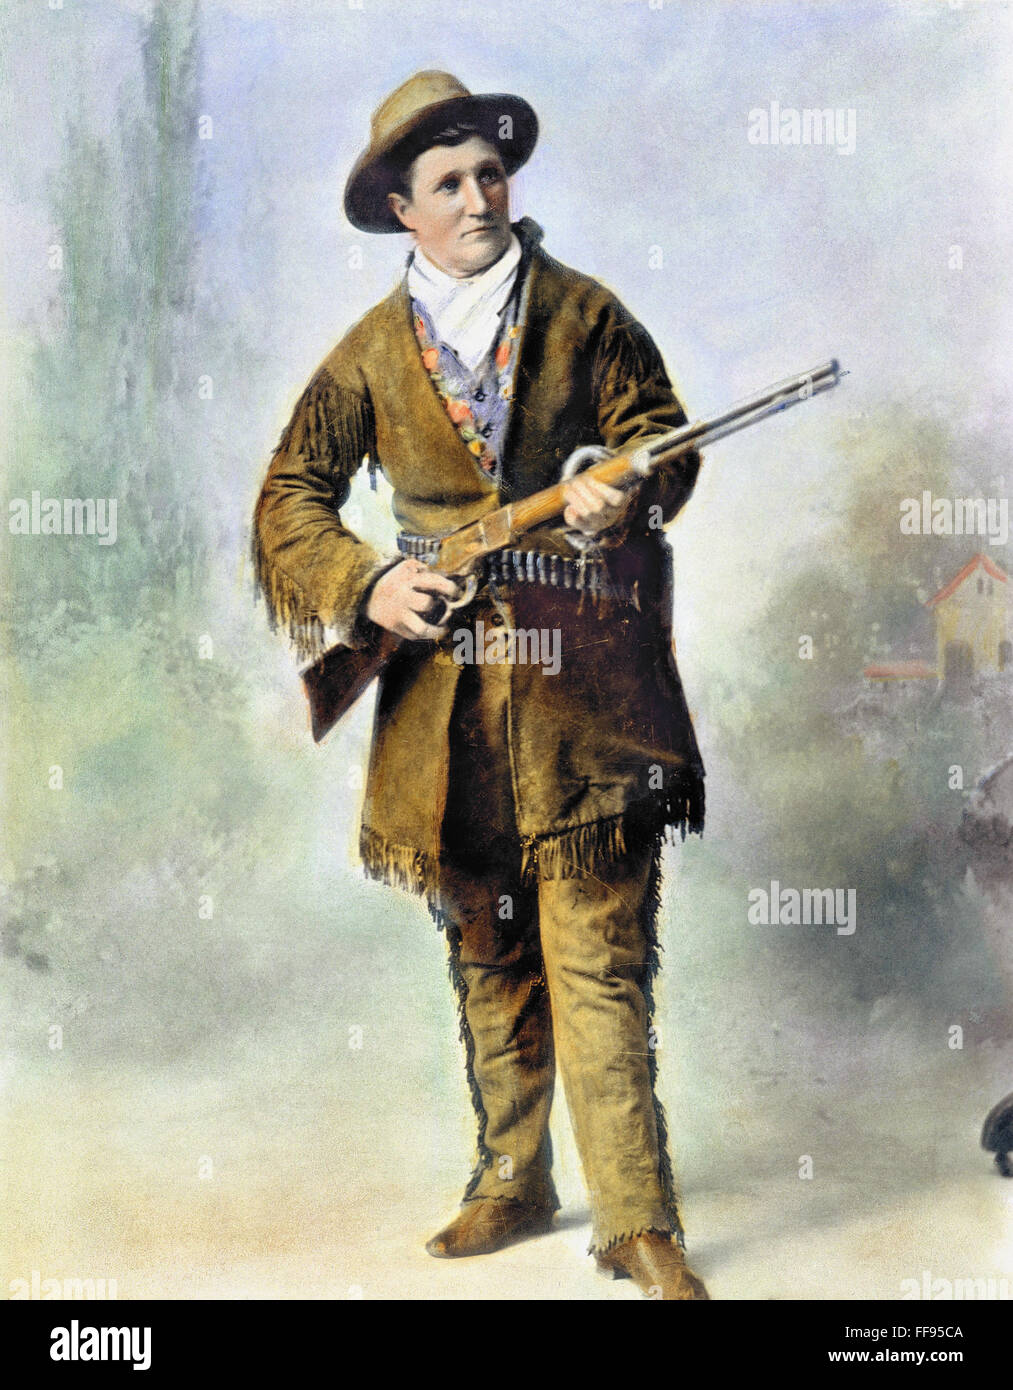 CALAMITY JANE (c1852-1903). /NMartha Jane Canary Burke, noto come 'Calamity Jane.' frontiera americana carattere. Olio Sopra una fotografia, 1895. Foto Stock